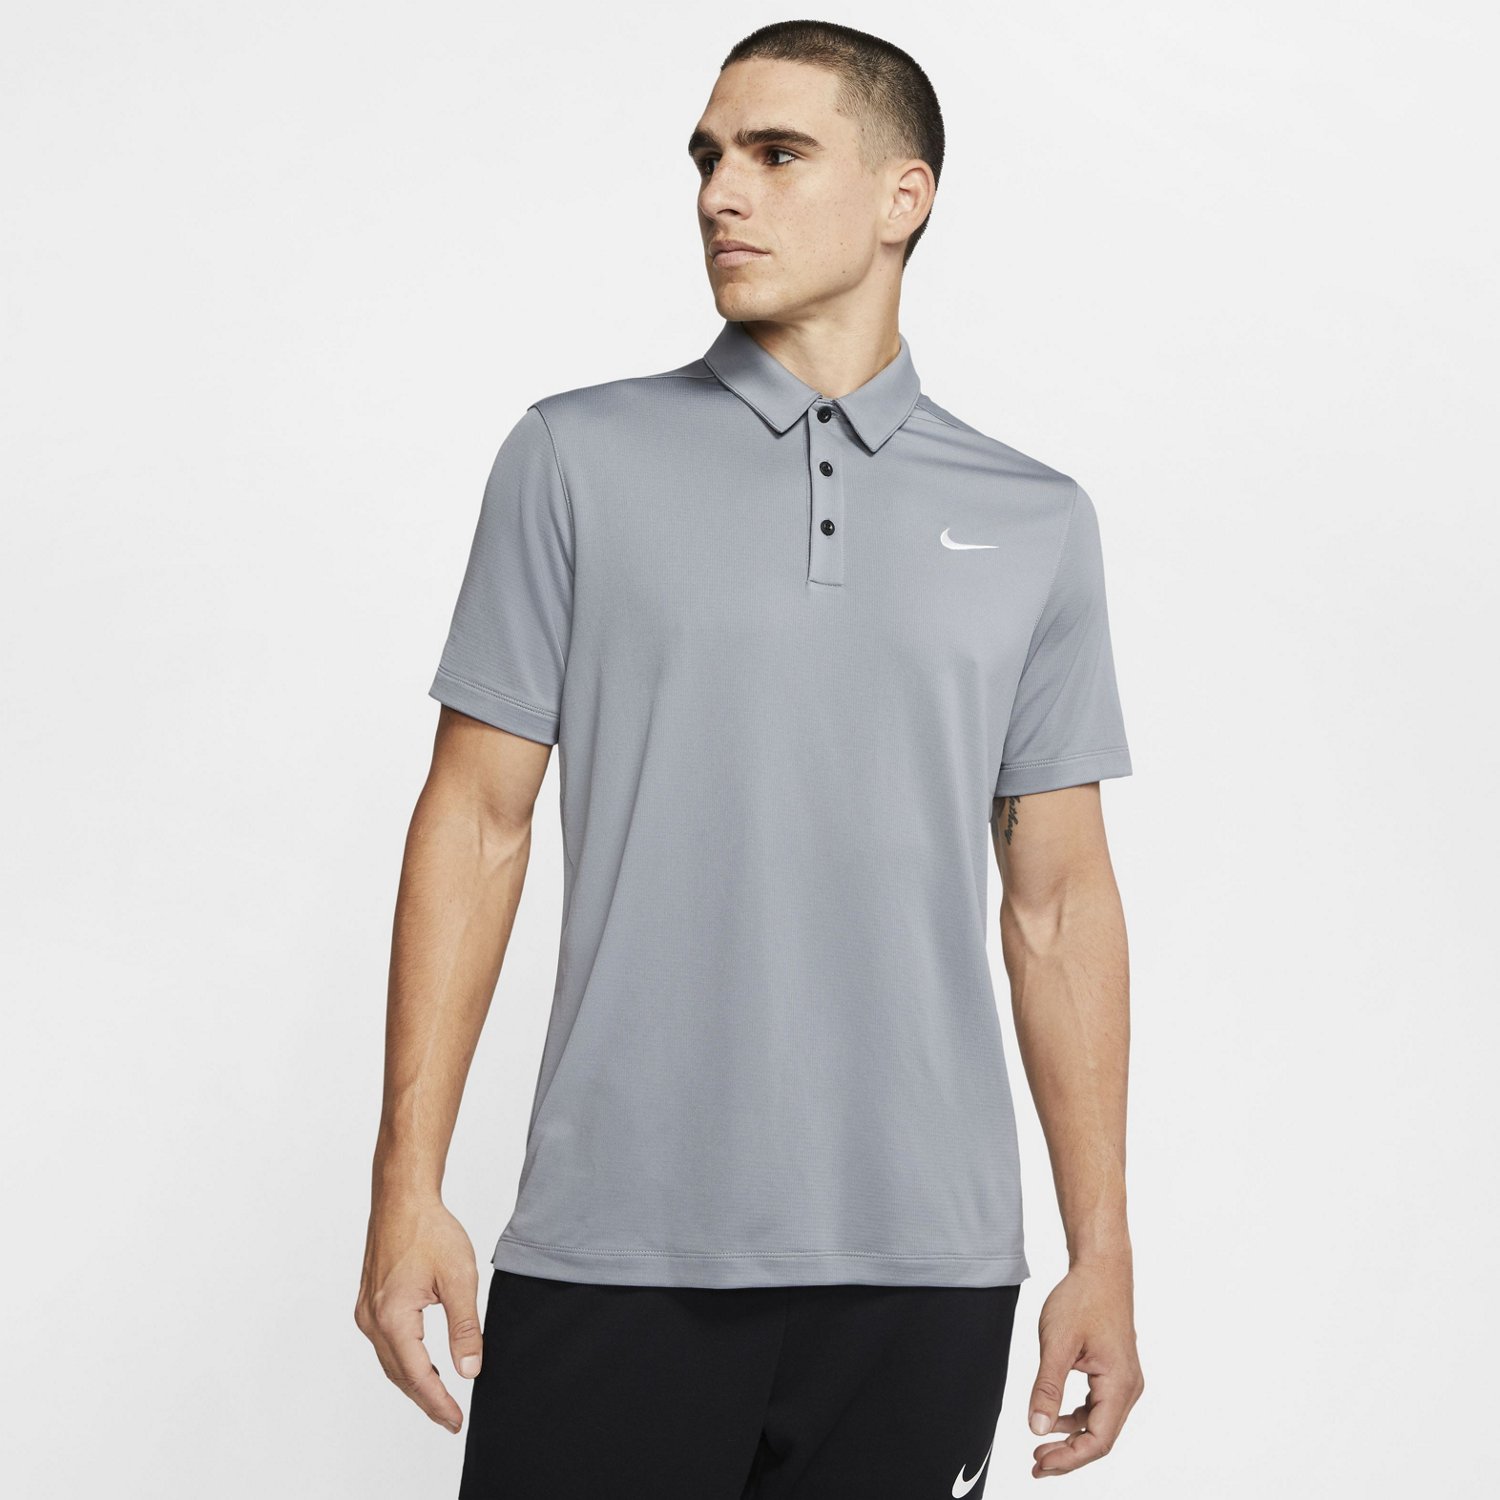 Nike Men's Dri-FIT Football Polo Shirt | Free Shipping at Academy